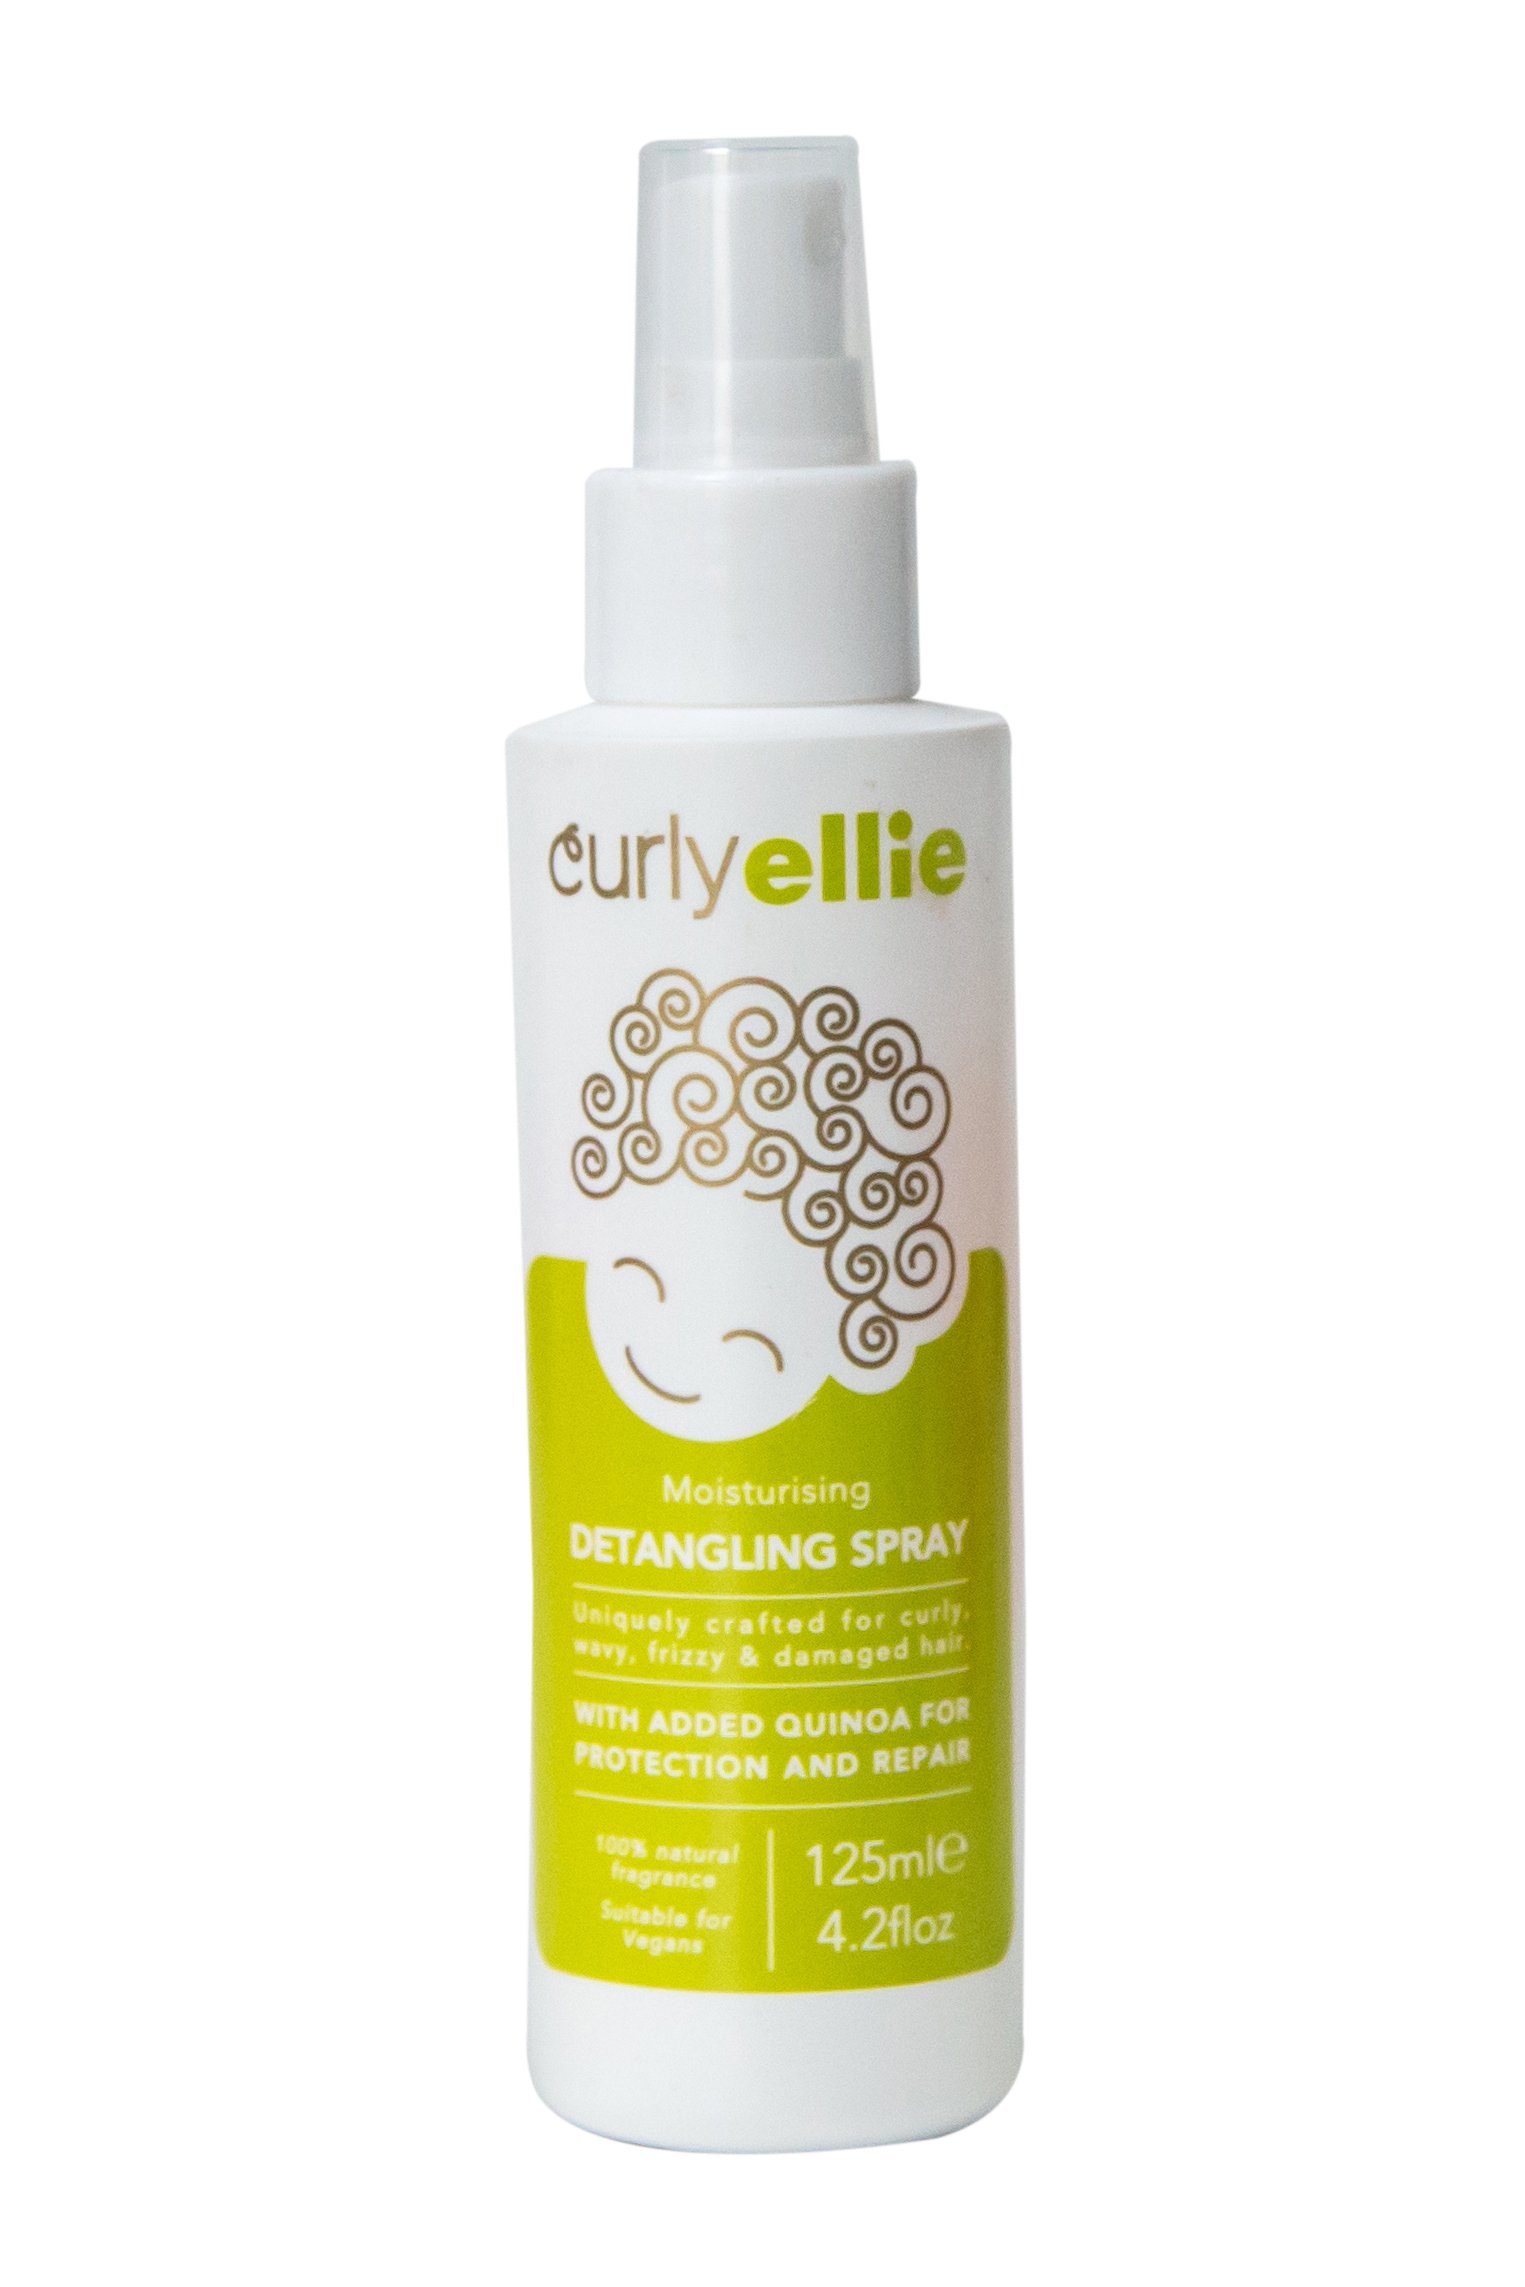 Curly Ellie Detangling Spray, Travel Size